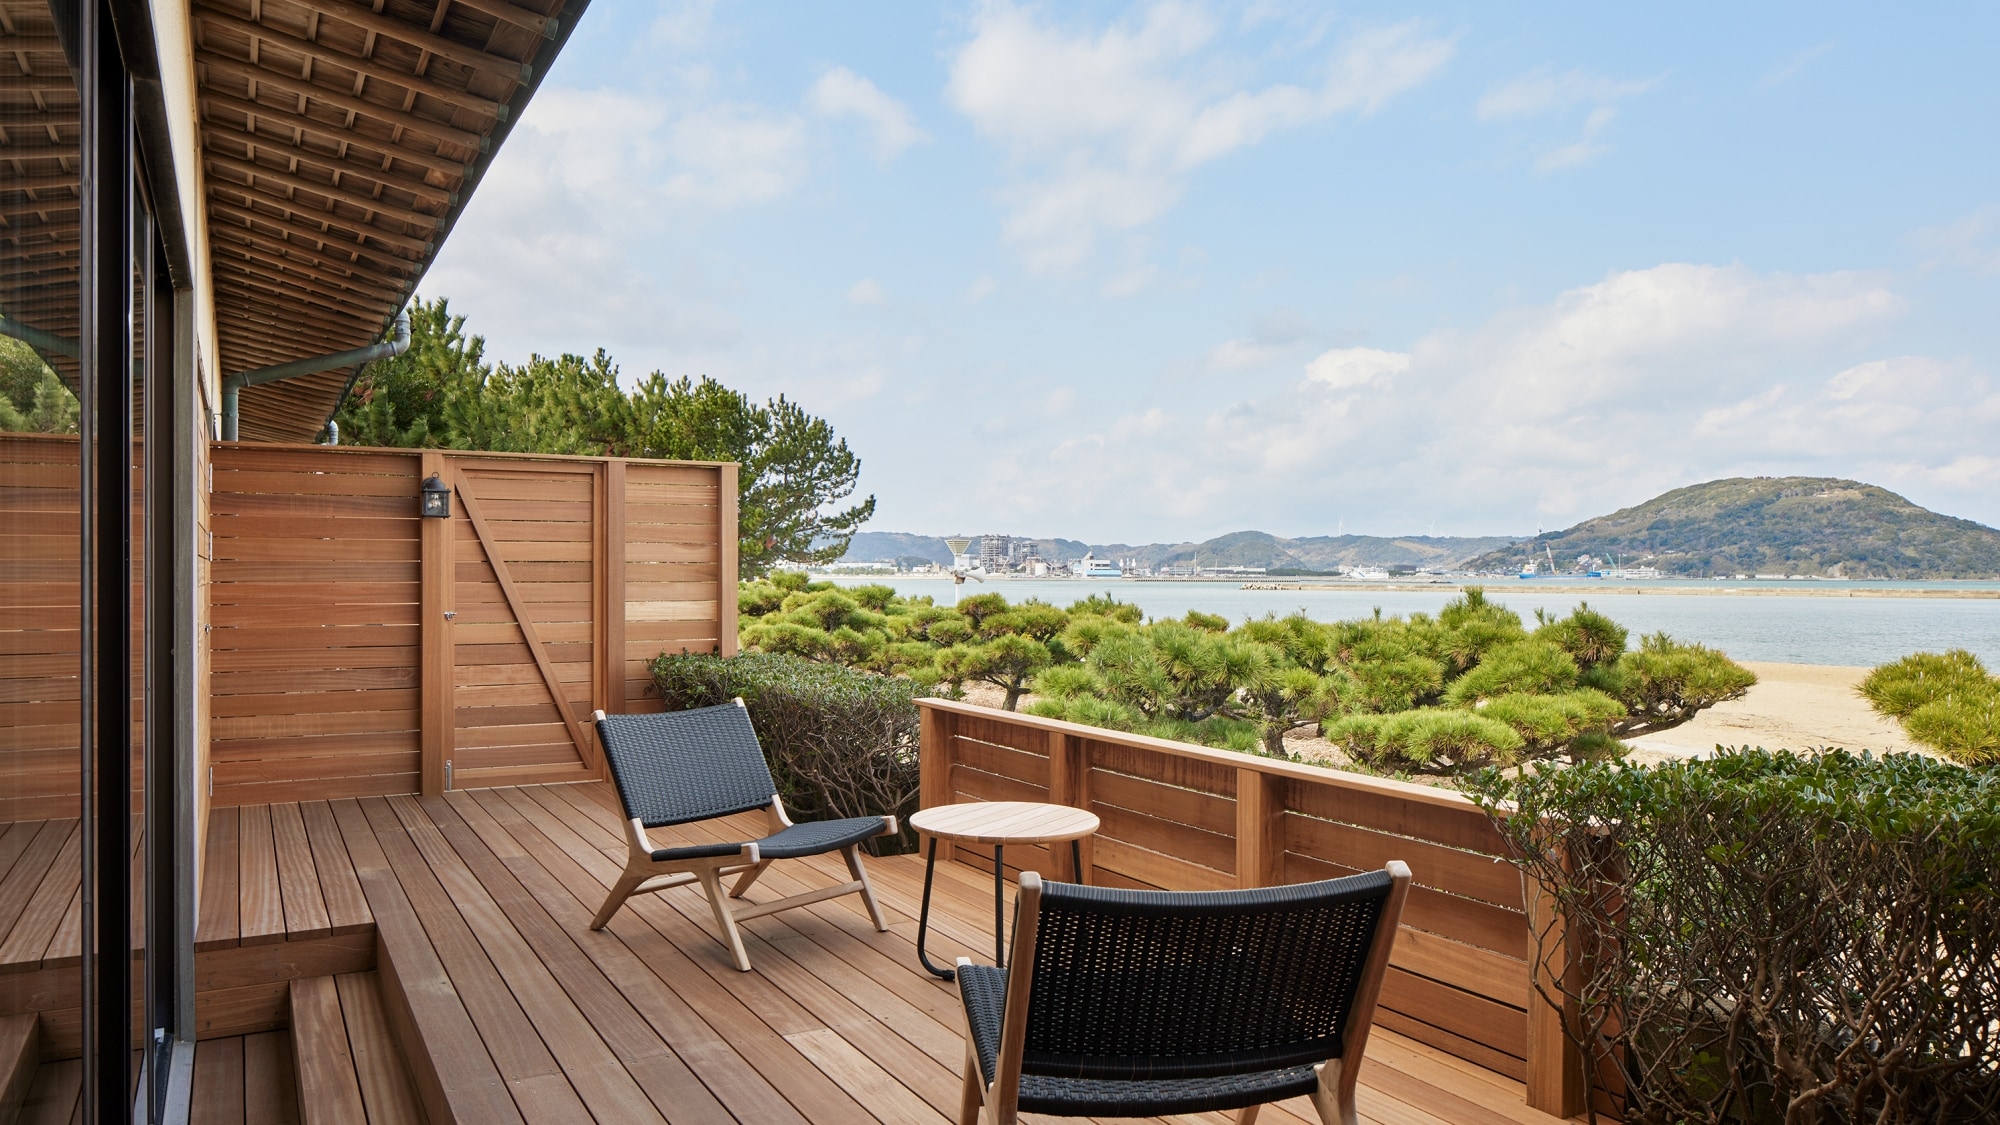 You can overlook the Karatsu sea from the [10 tatami mats, pine, bamboo, and plum] terrace.